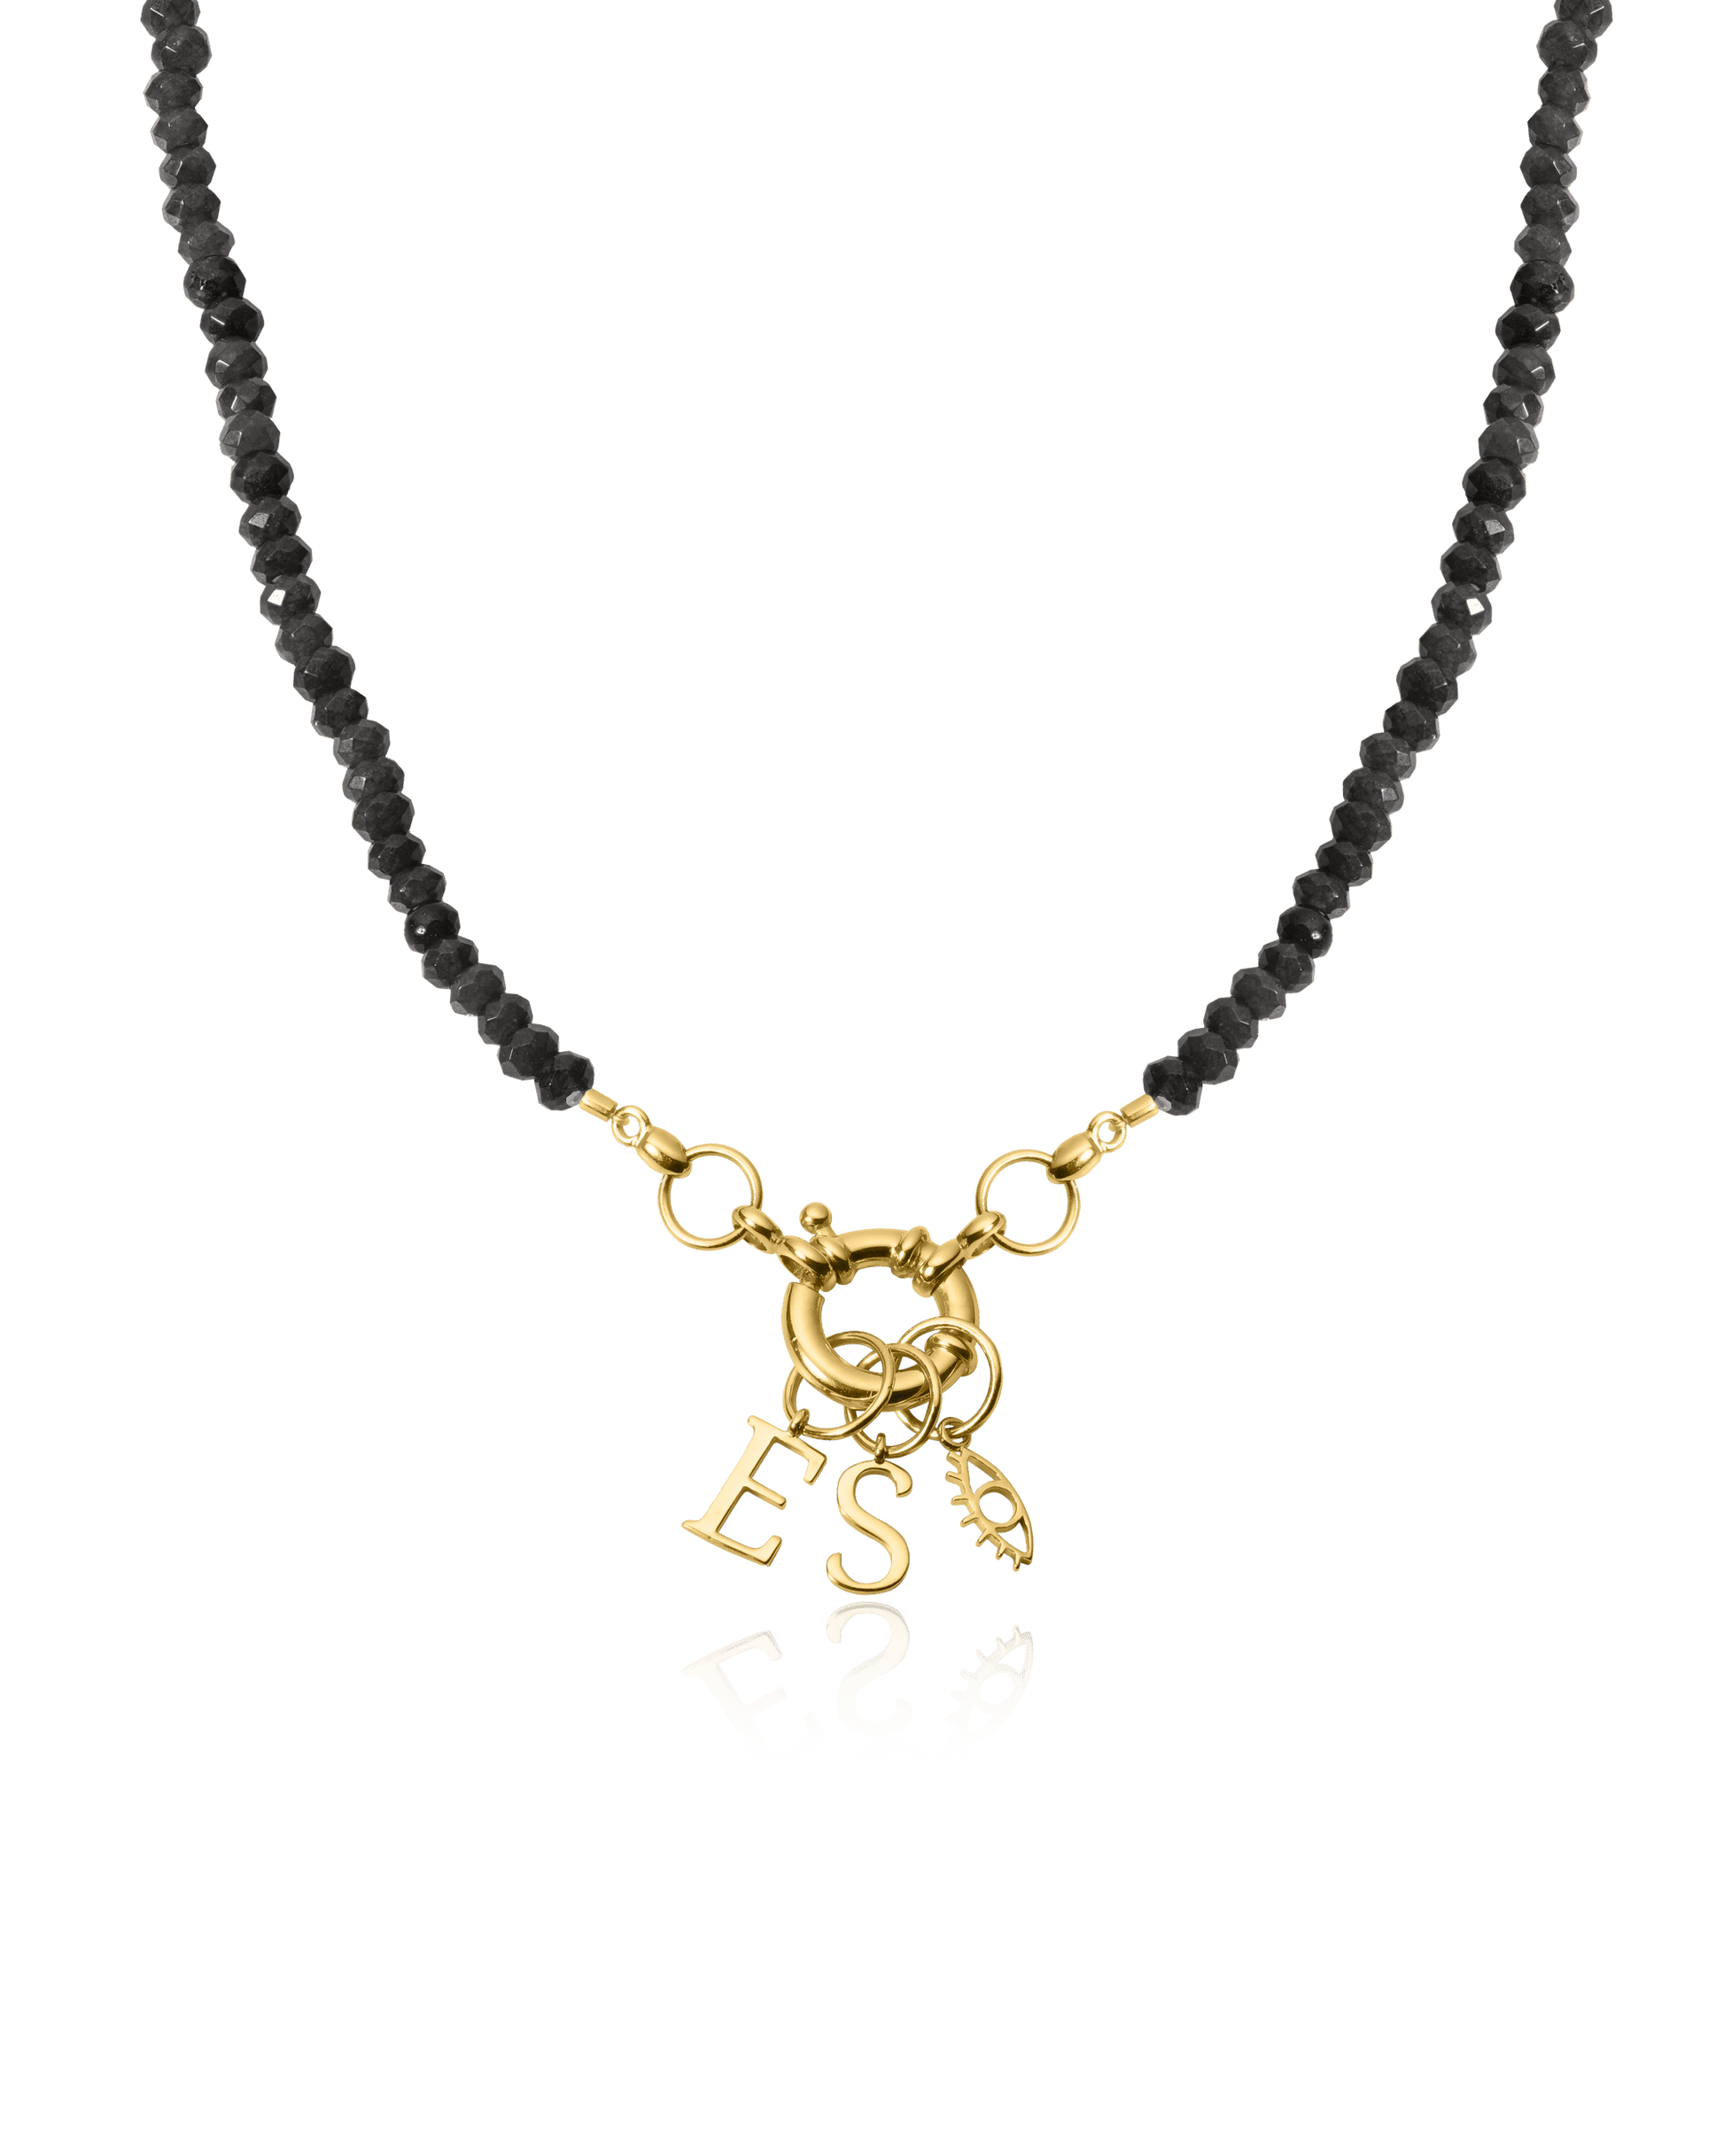 Collier Pendentif Cadenas - Or Jaune Plaqué 18 carats Necklaces magal-dev Perles de verre Spinelle Noir 1 Pendentif 40cm